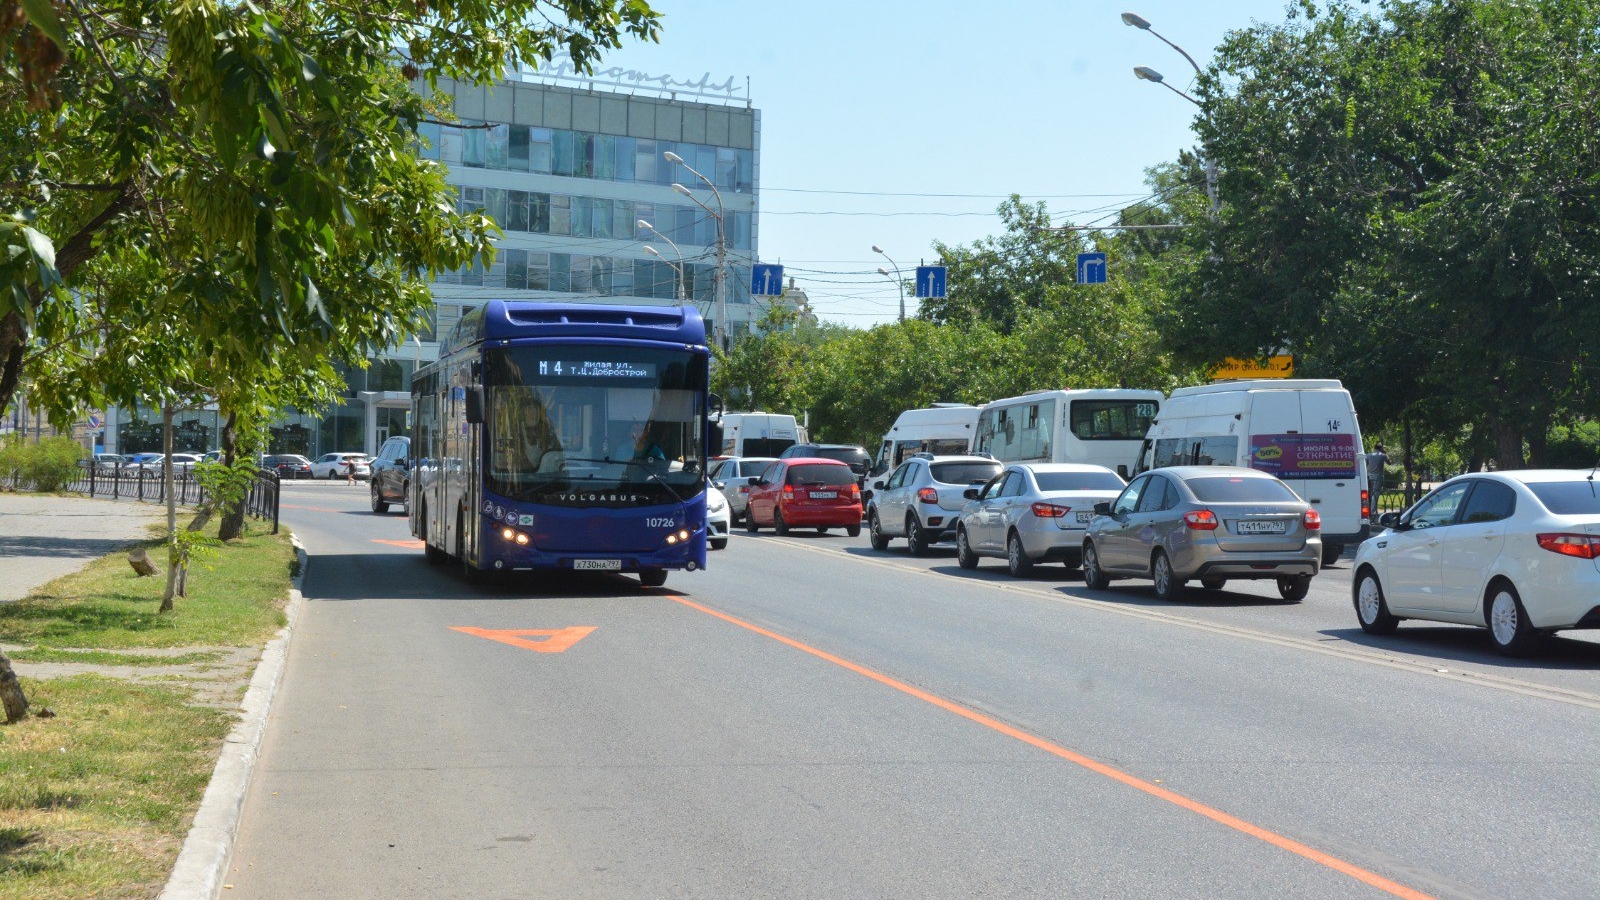 Маршрут 4 астрахань. Автобус. Общественный транспорт Астрахань. Автобус в городе. Новые автобусы.